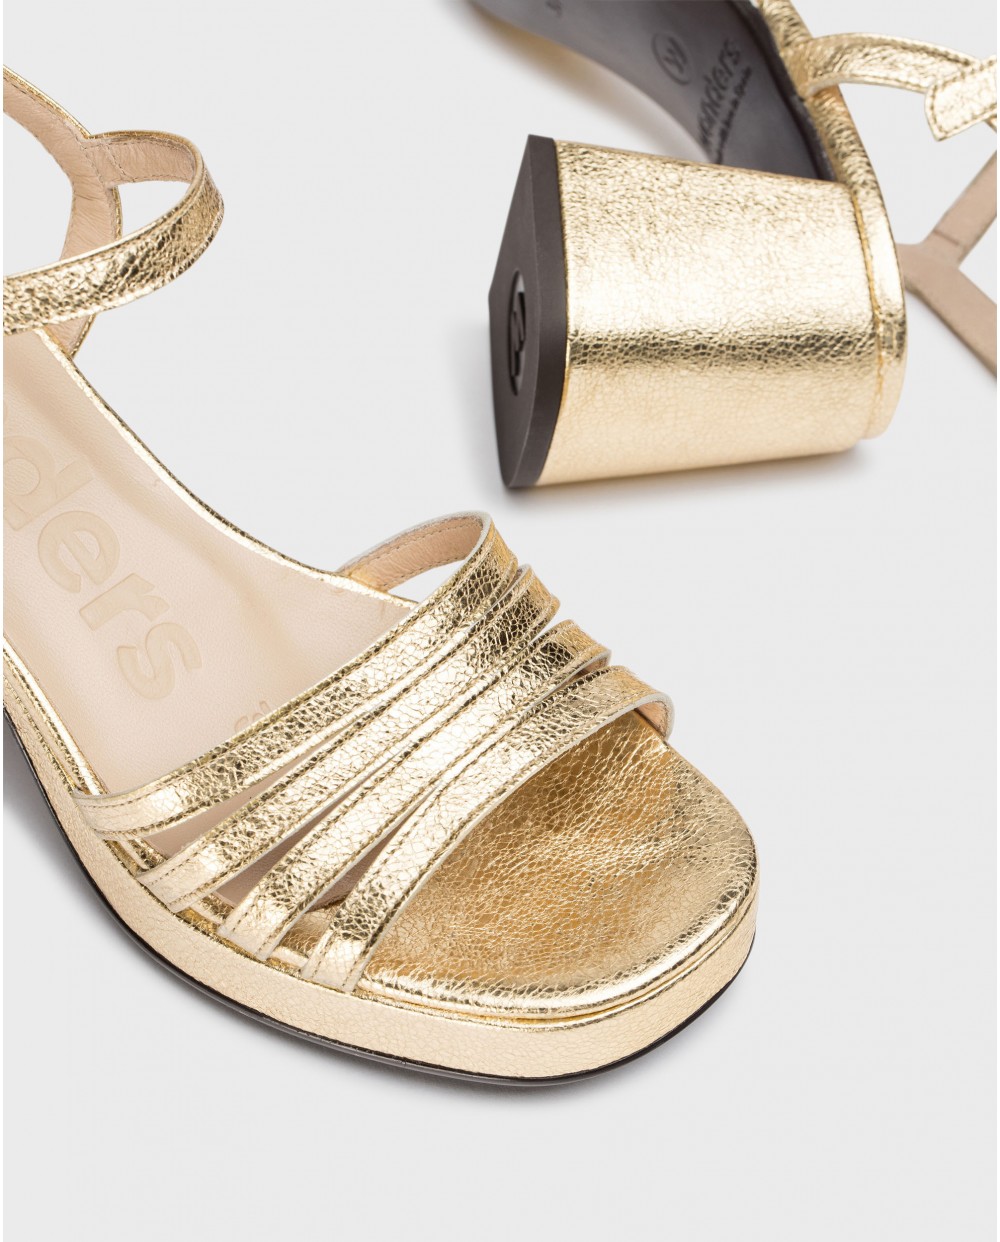 Wonders-Women shoes-Gold ZAIDA heeled sandals